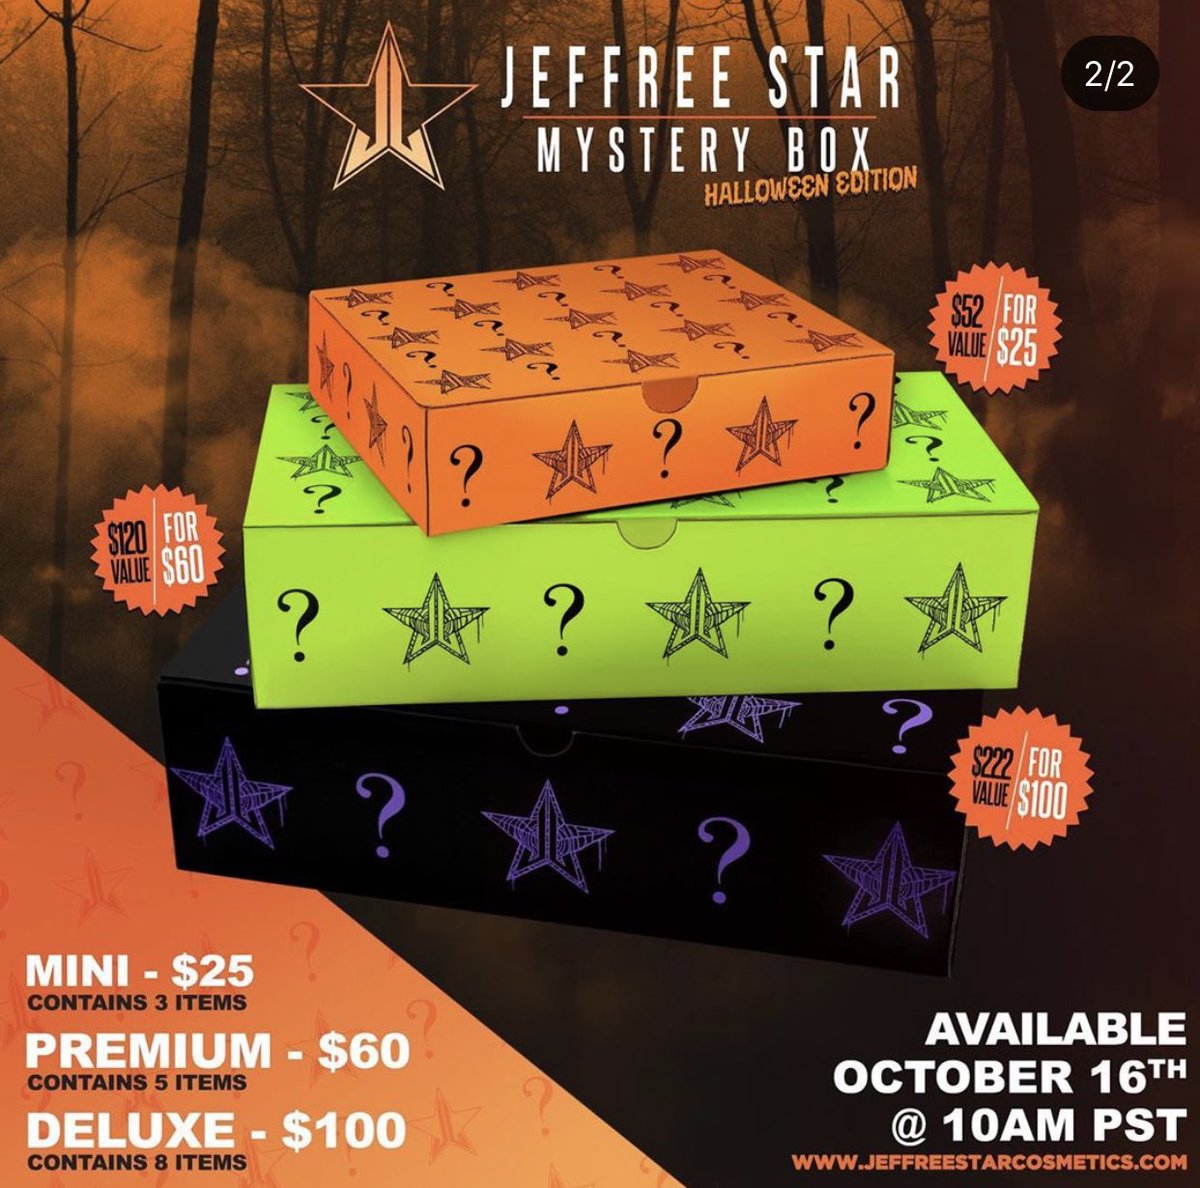 Jeffree Star Mystery Box Halloween 2019 Edition Coming Soon